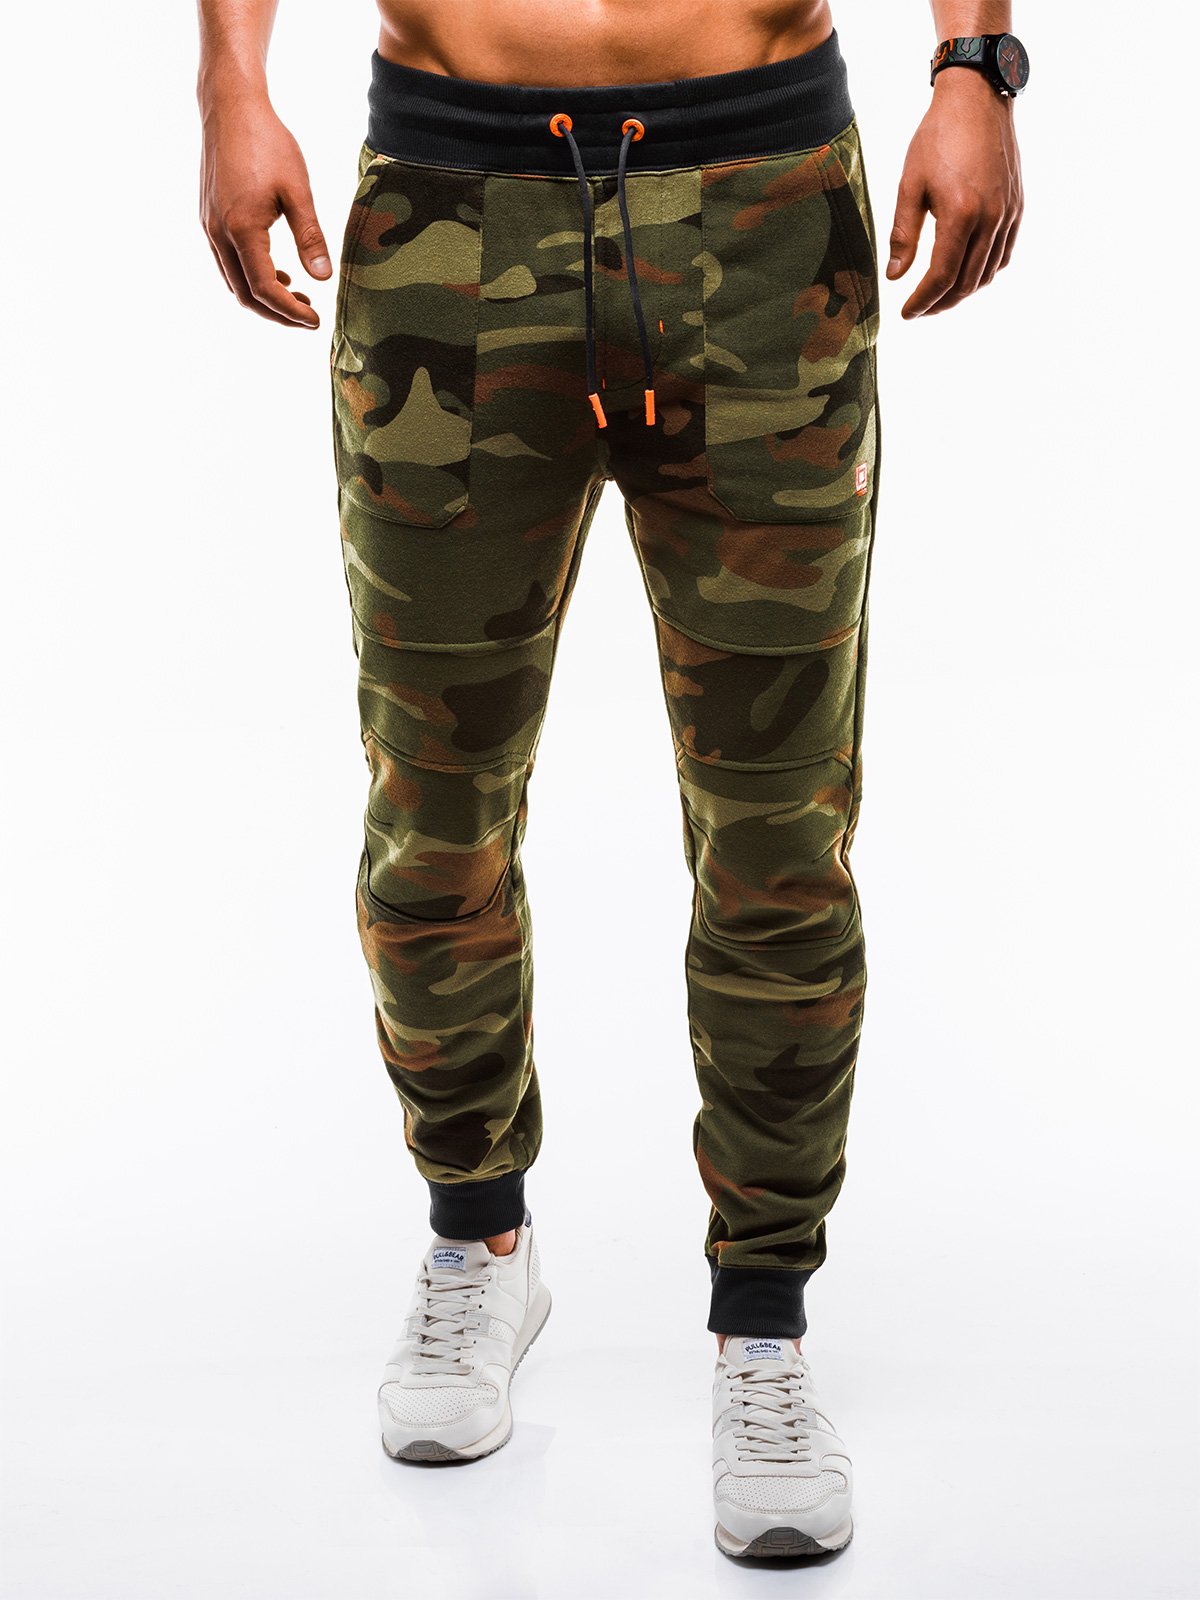 Men's sweatpants P820 - green/camo | MODONE wholesale - Clothing For Men